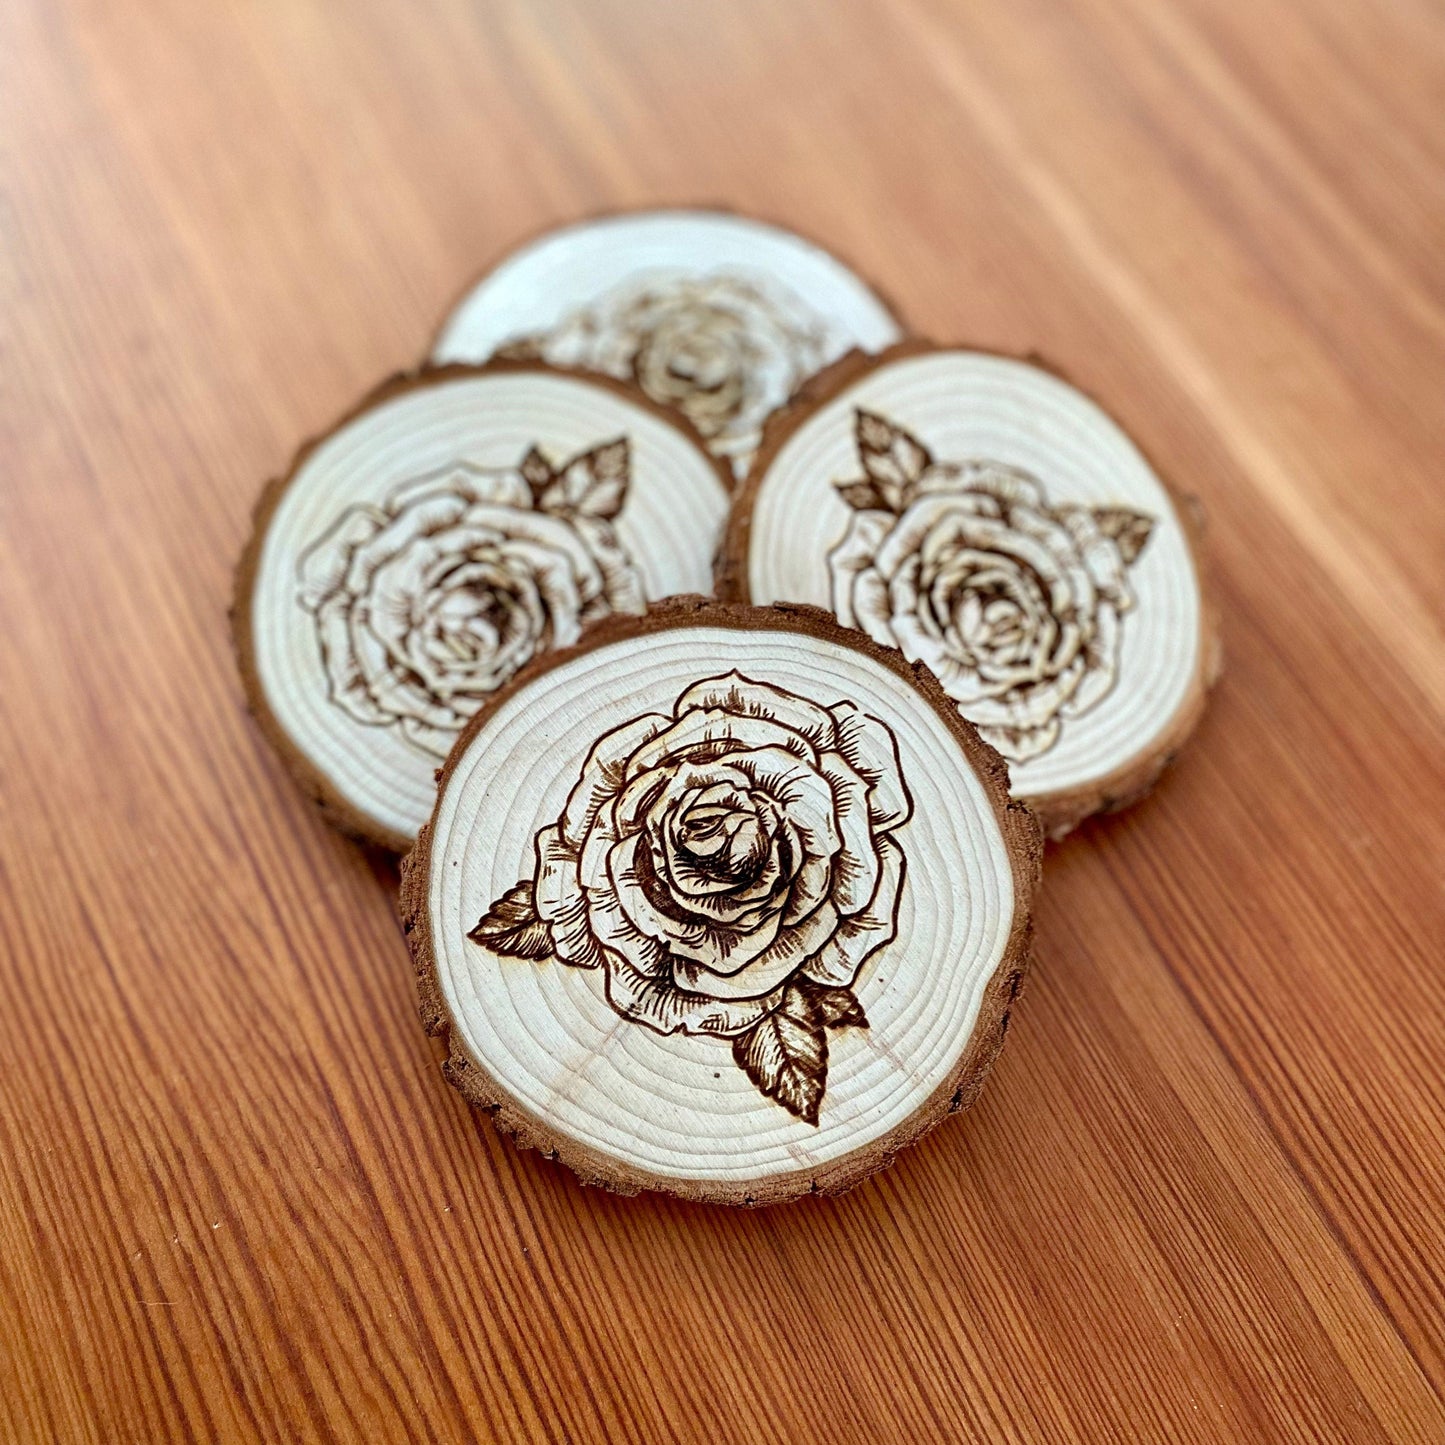 Rose Engraved Wood Coaster Set